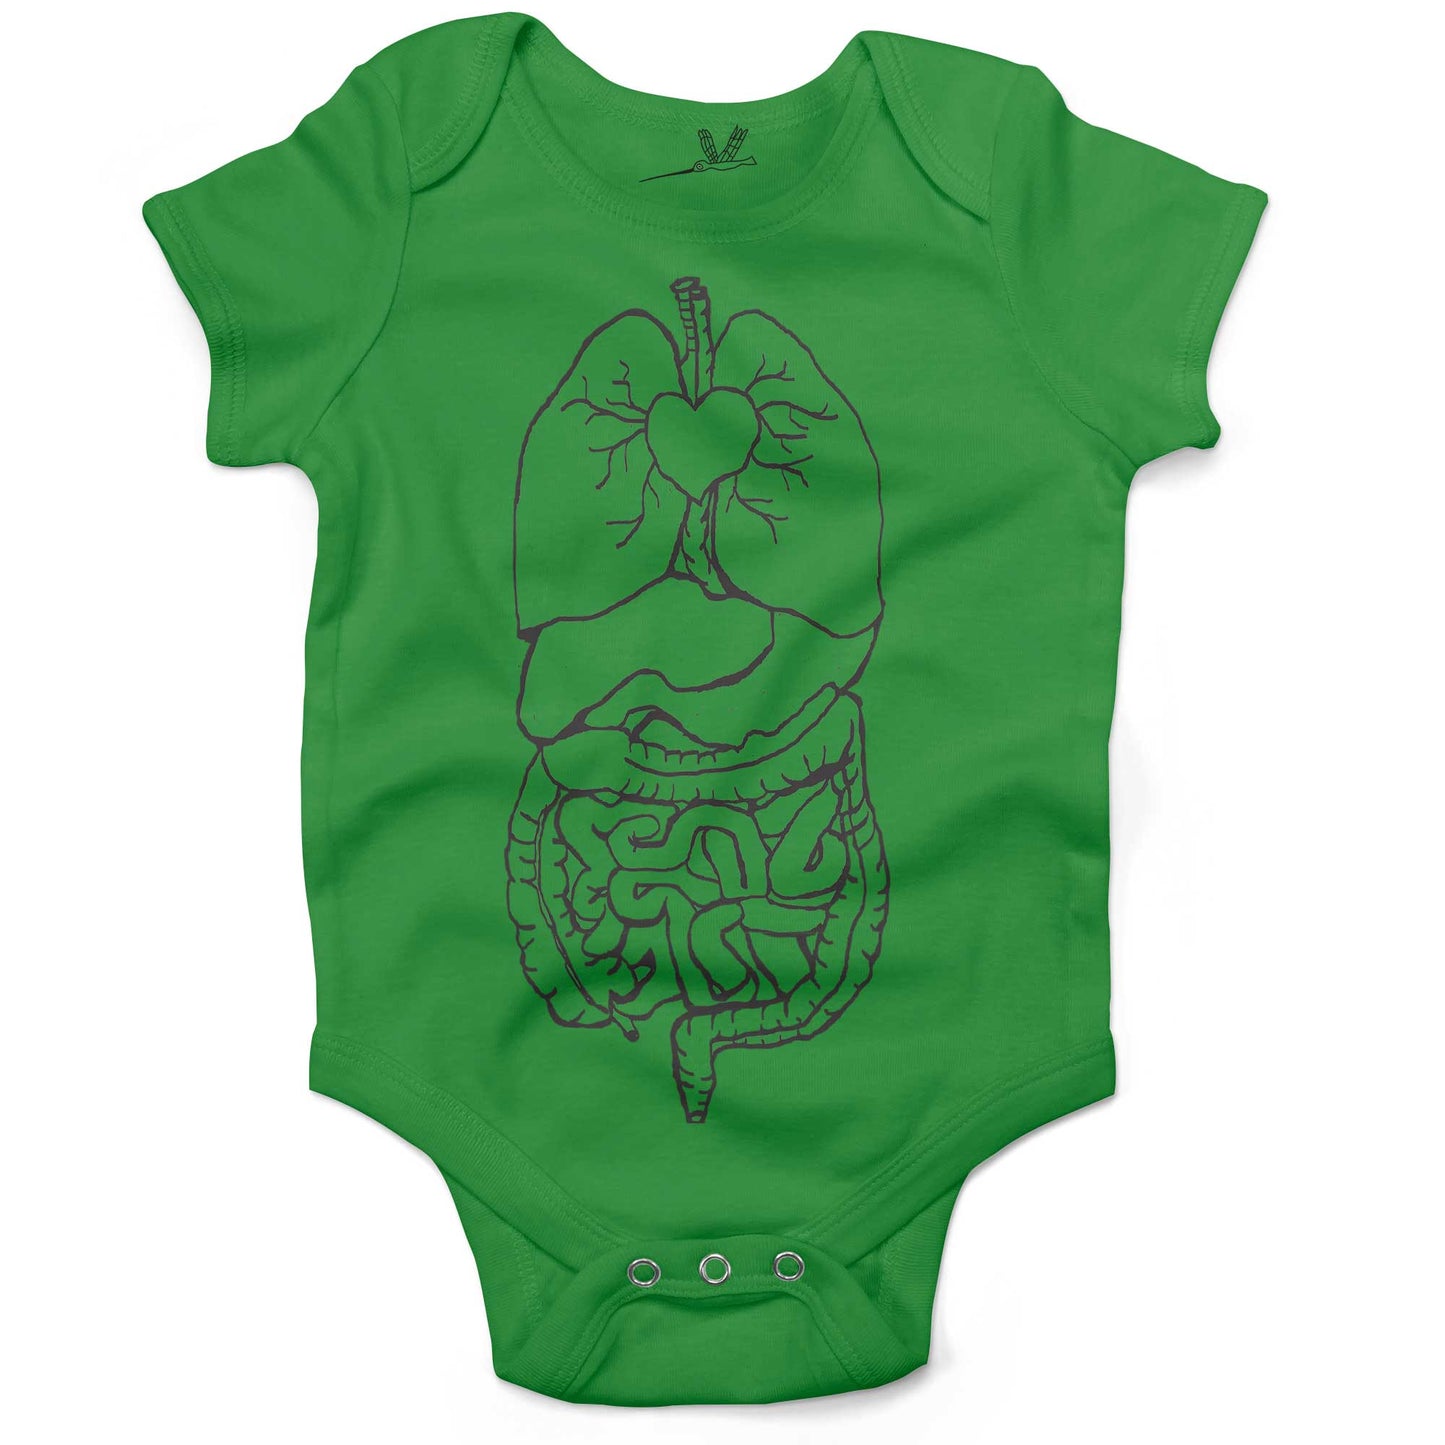 Digestive System Infant Bodysuit-Grass Green-3-6 months